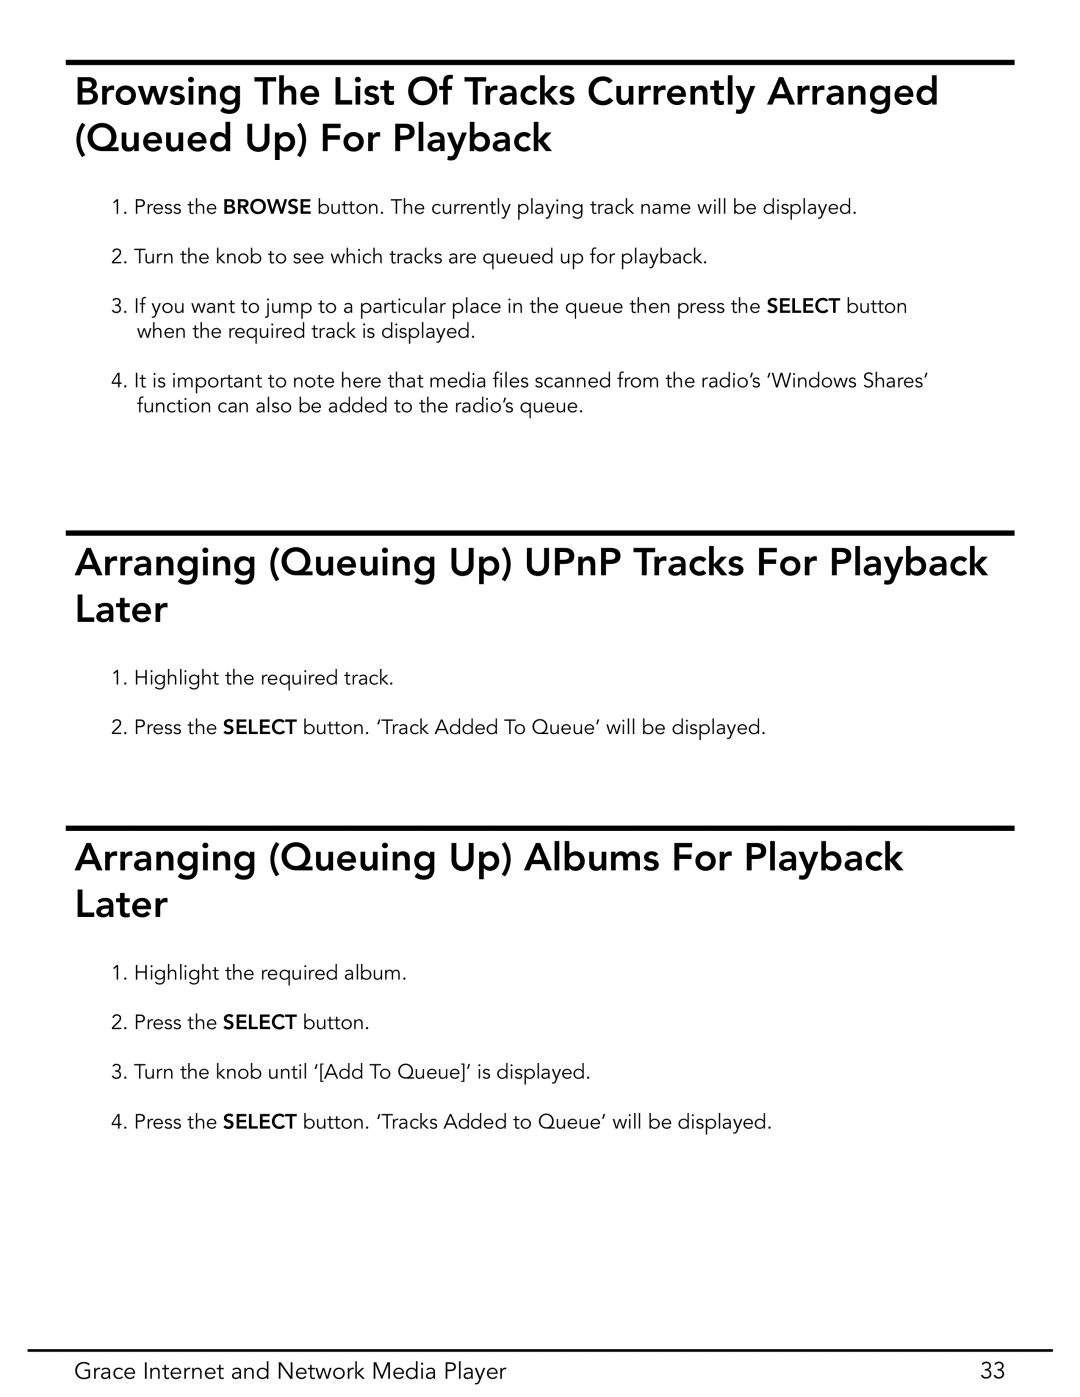 Grace GDI-IR3020 manual Arranging Queuing Up Albums For Playback Later 